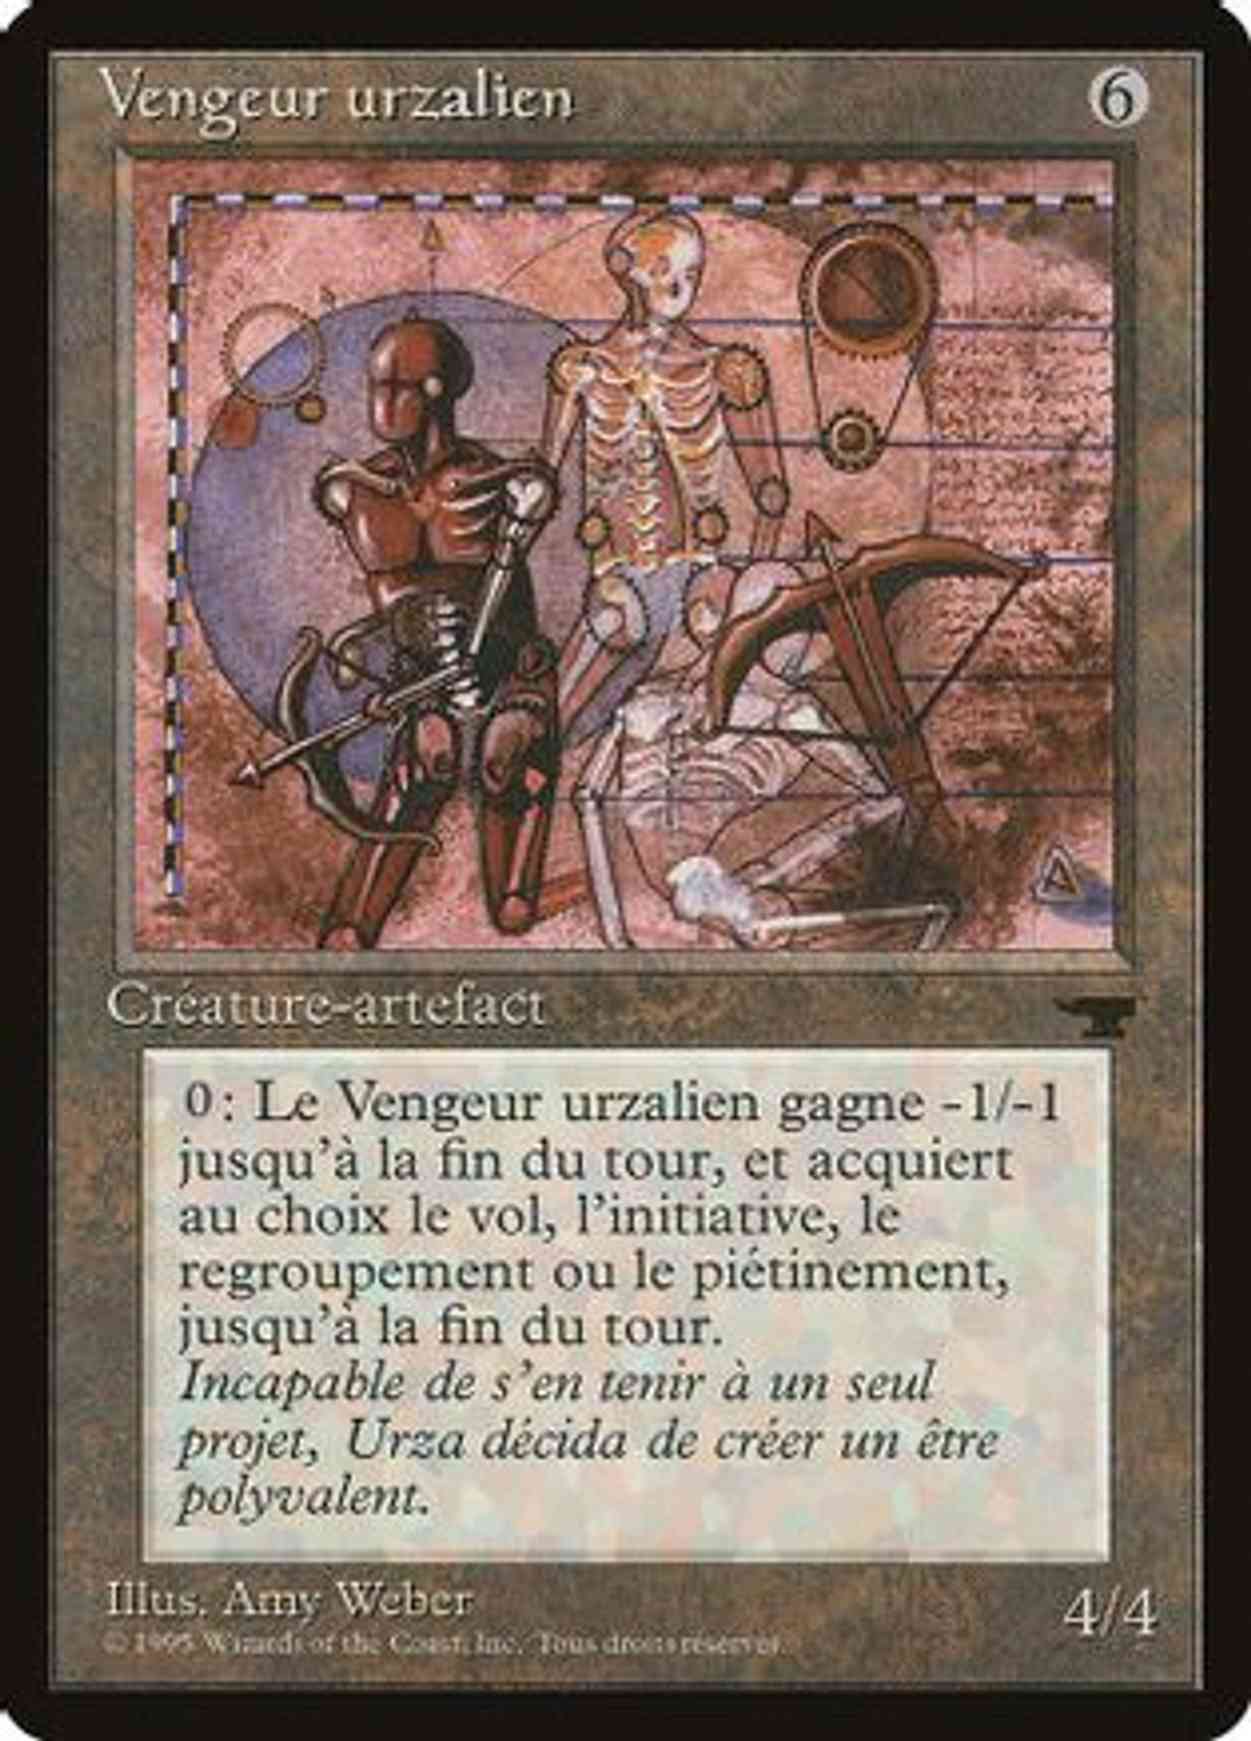 Urza's Avenger (French) - Vengeur urzalien" magic card front